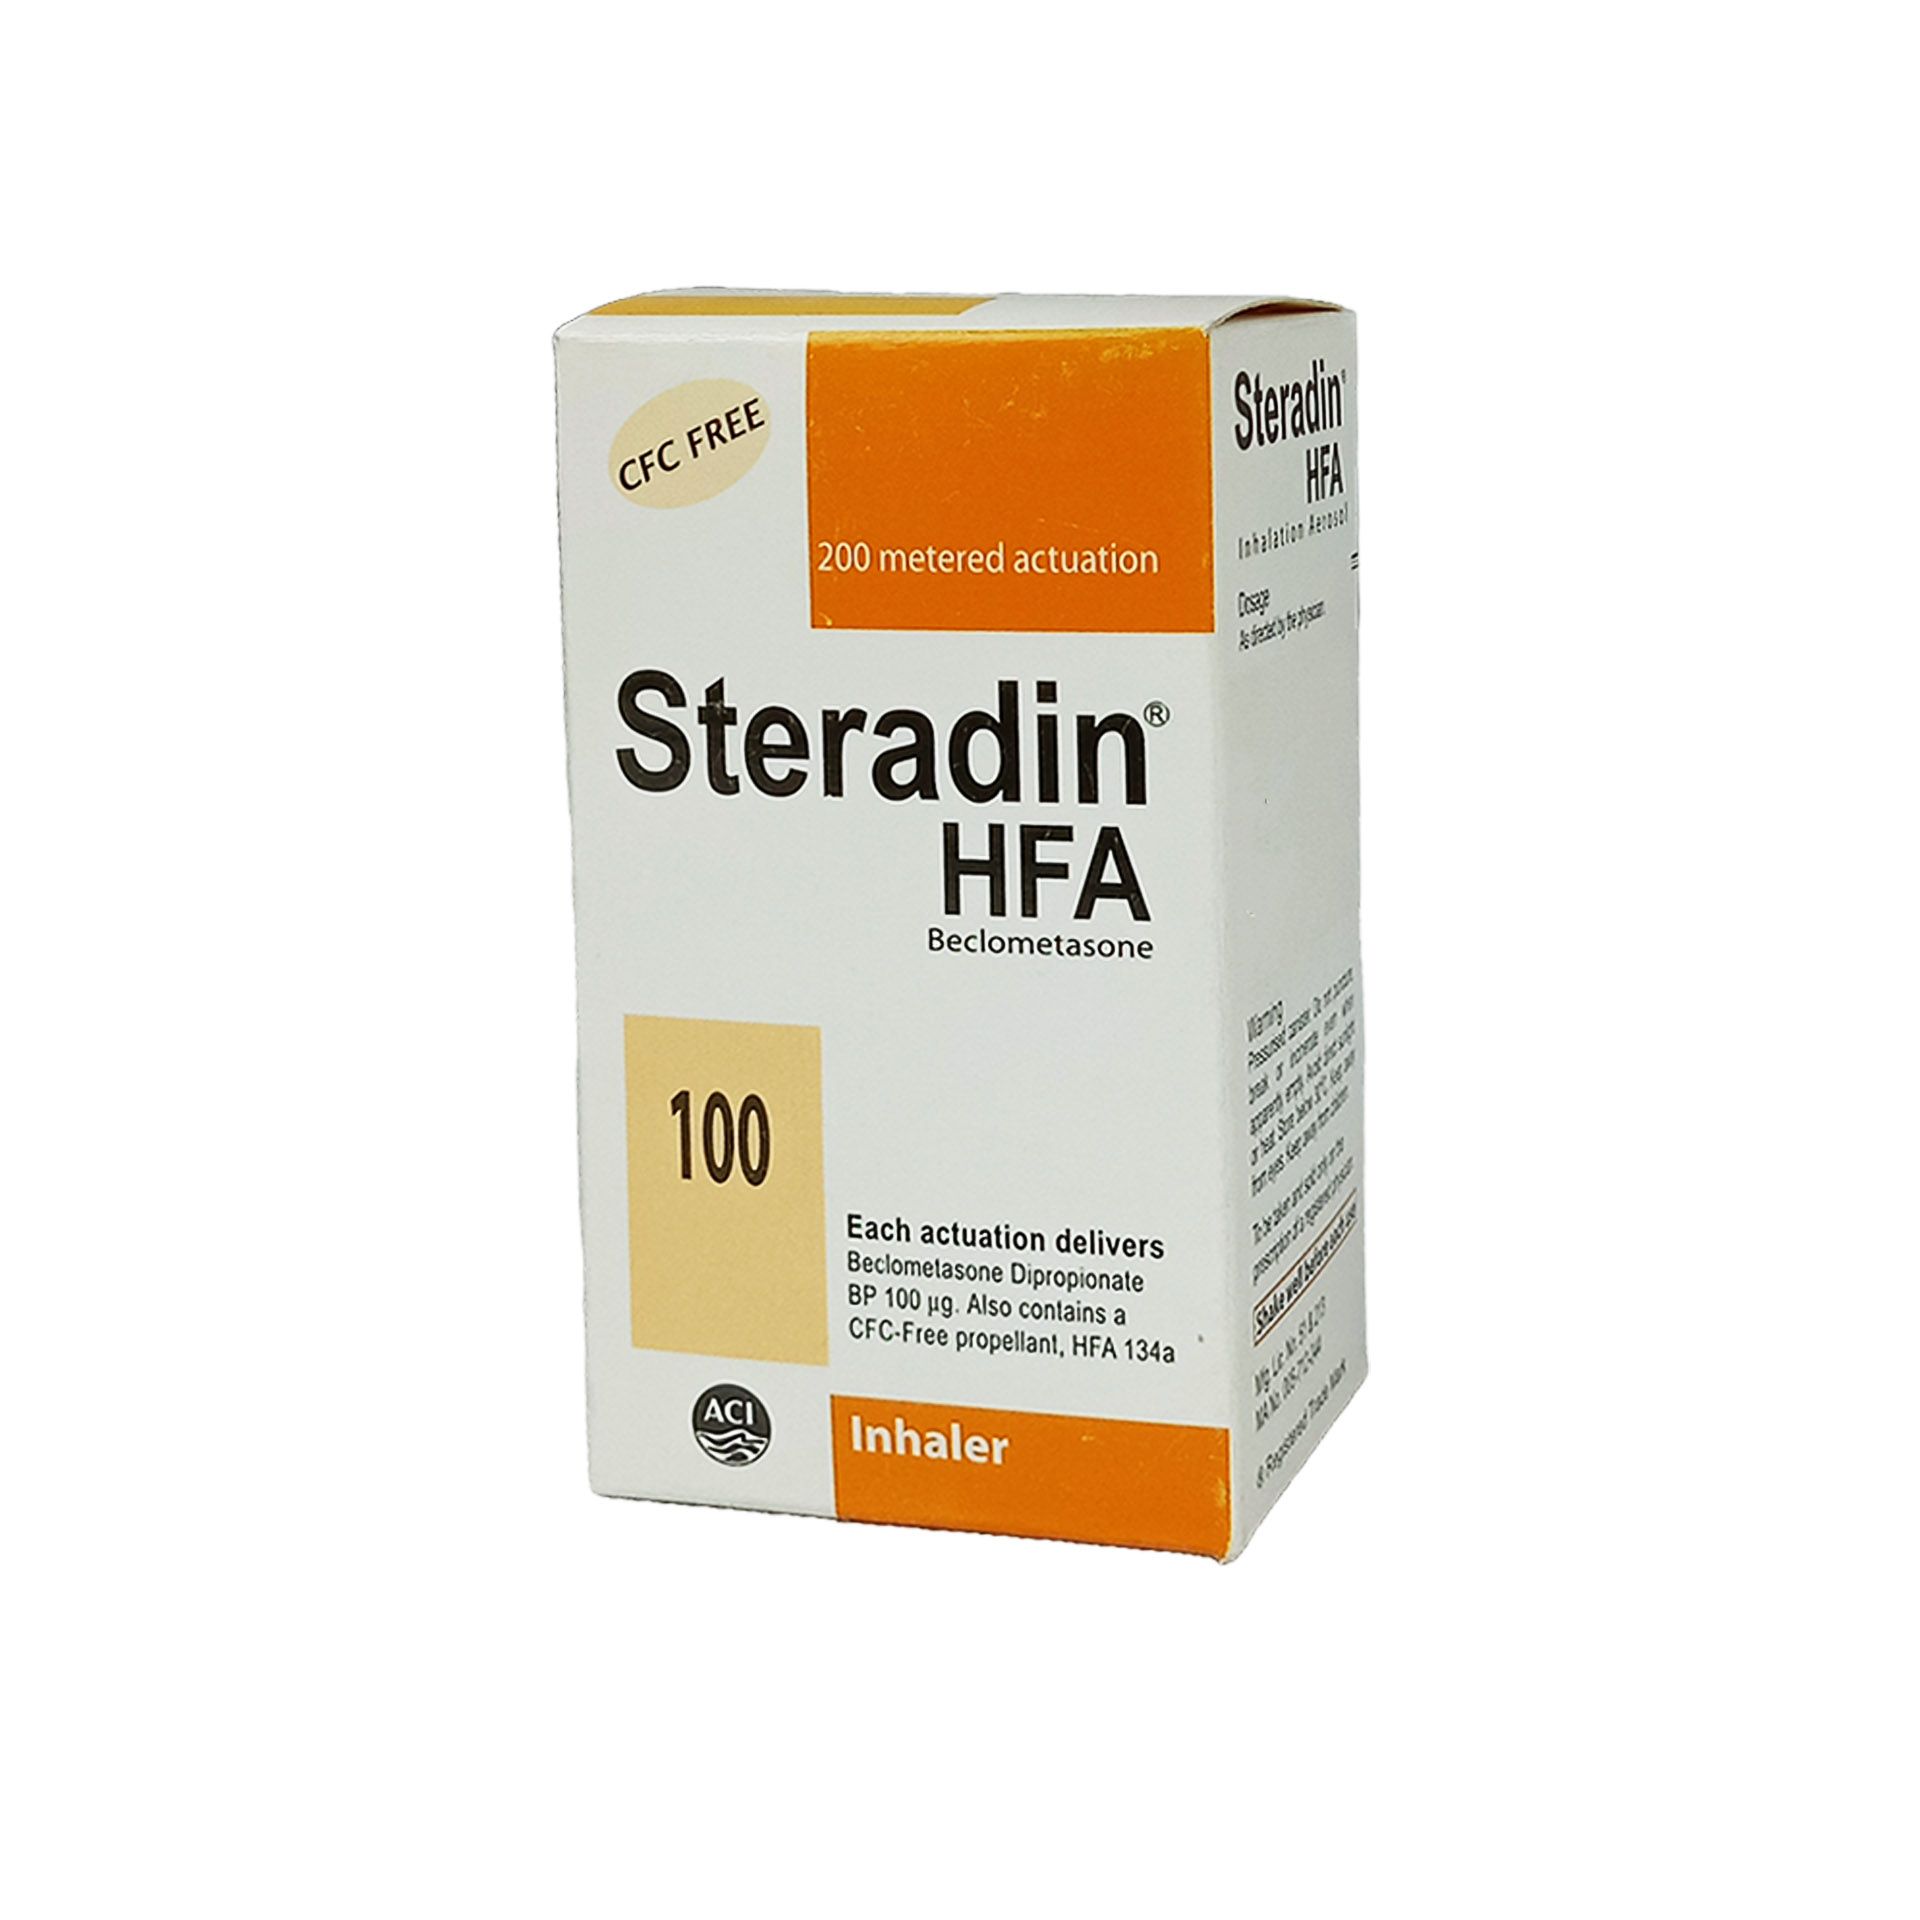 Steradin HFA 100mcg/puff Inhaler